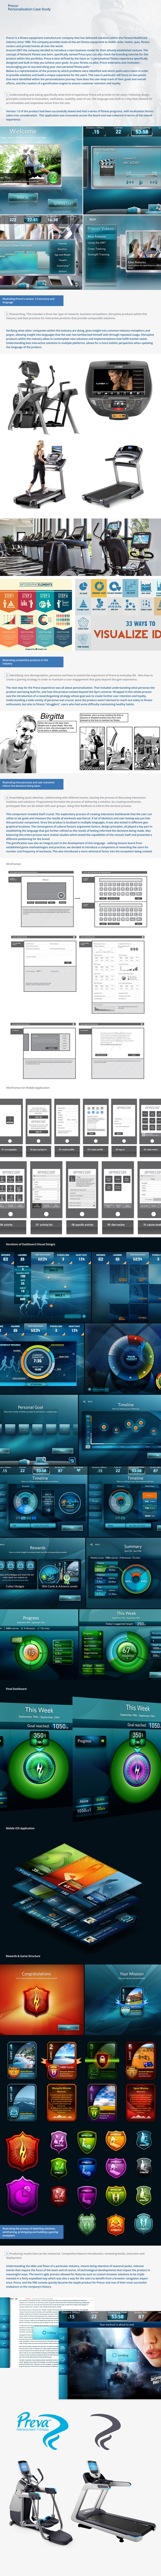 fitness infographics interactive user experience Health application Native cross platform development